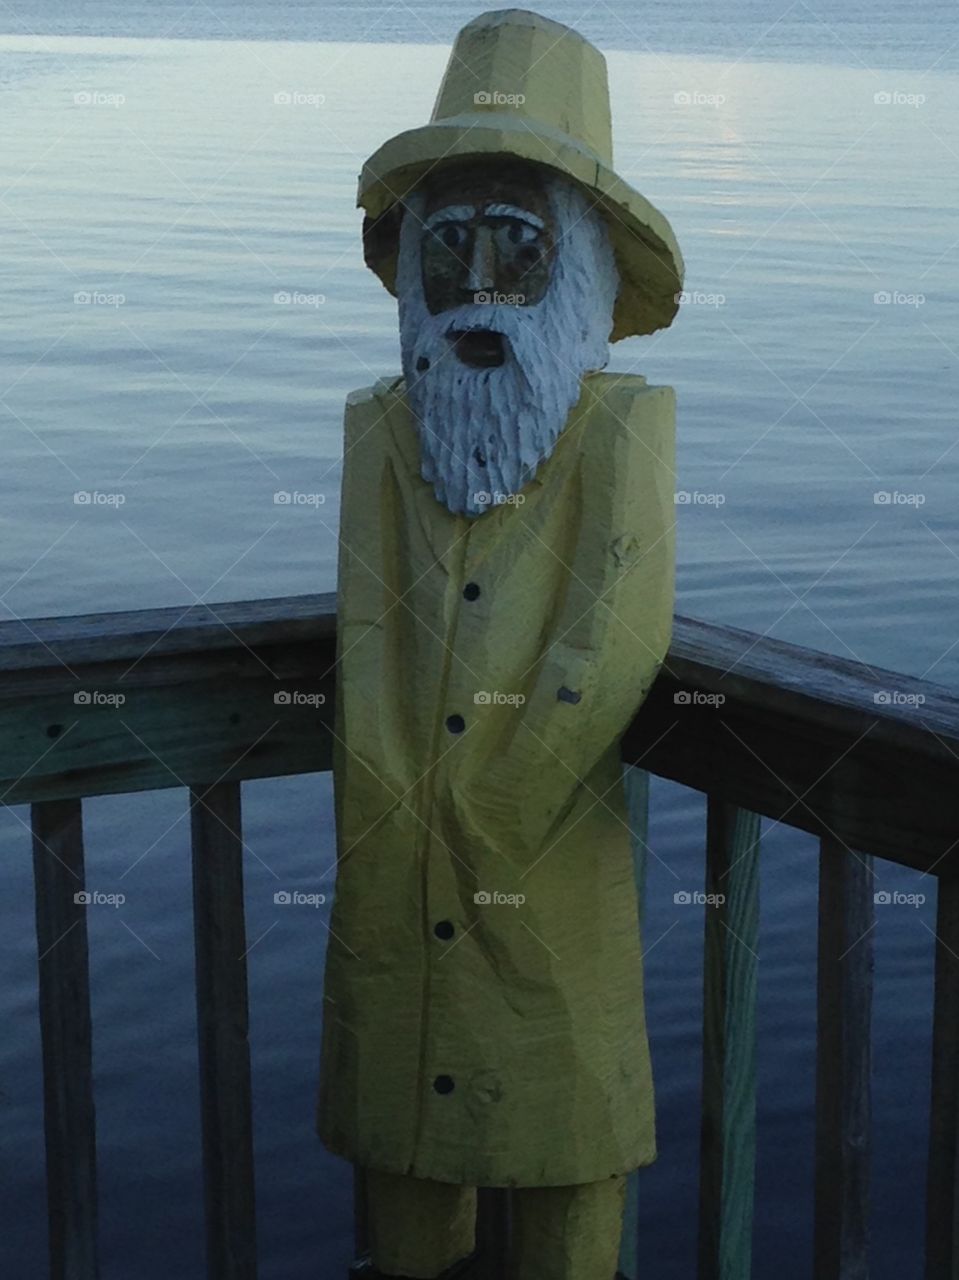 Wooden figure of man wearing raincoat